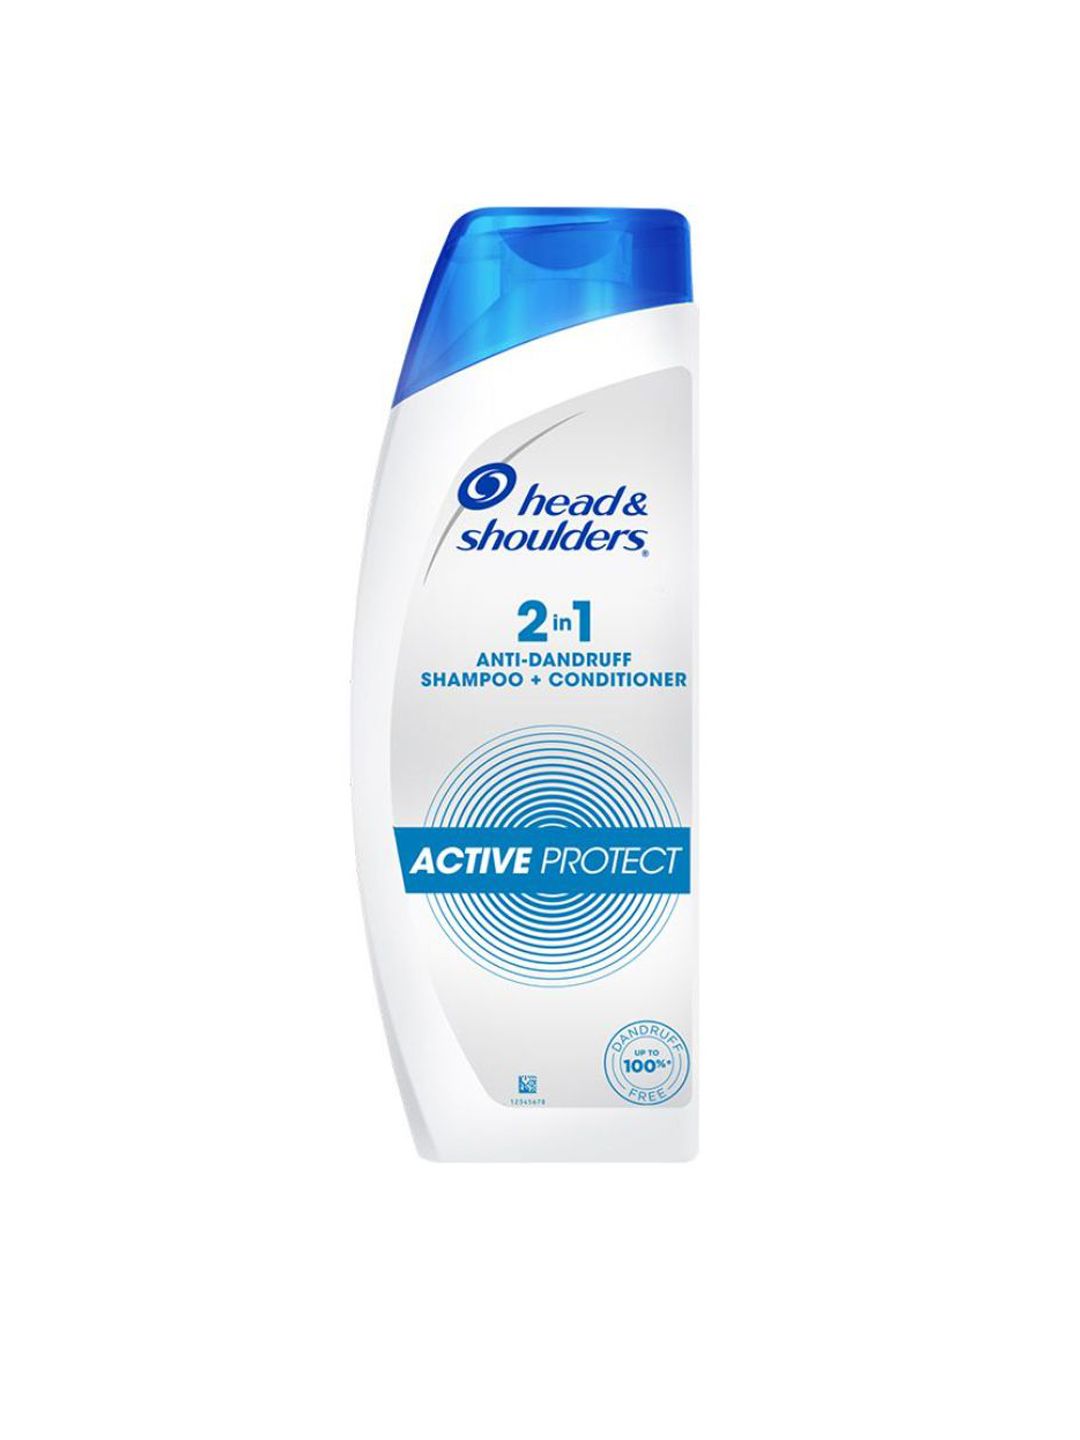 Head & Shoulders 2 in 1 Active Protect Anti Dandruff Shampoo + Conditioner-180 ml Price in India